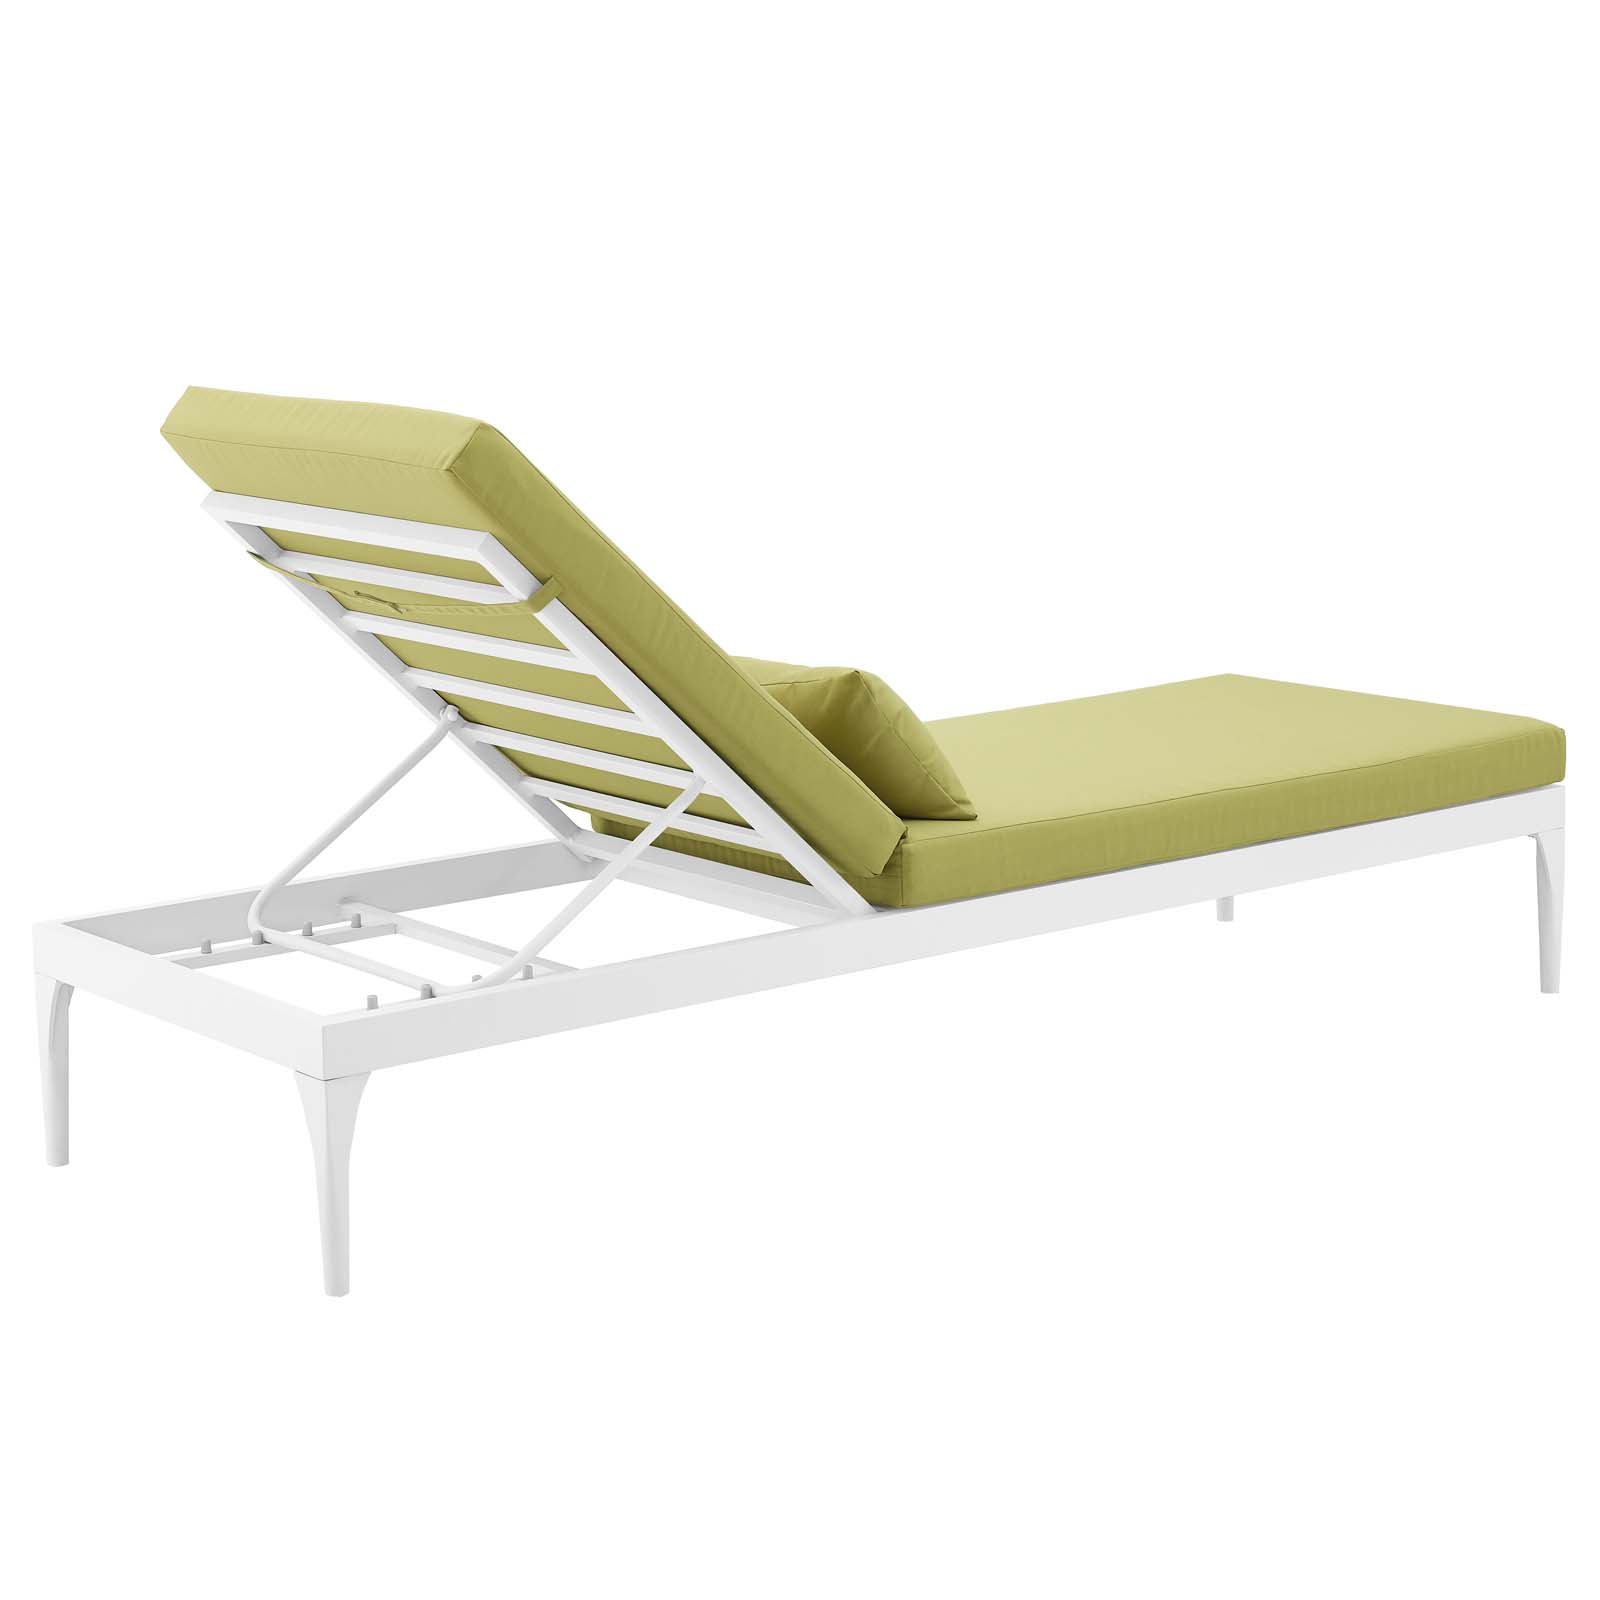 Modern Contemporary Urban Design Outdoor Patio Balcony Garden Furniture Lounge Chair Chaise, Fabric Aluminium, Green White - image 4 of 7